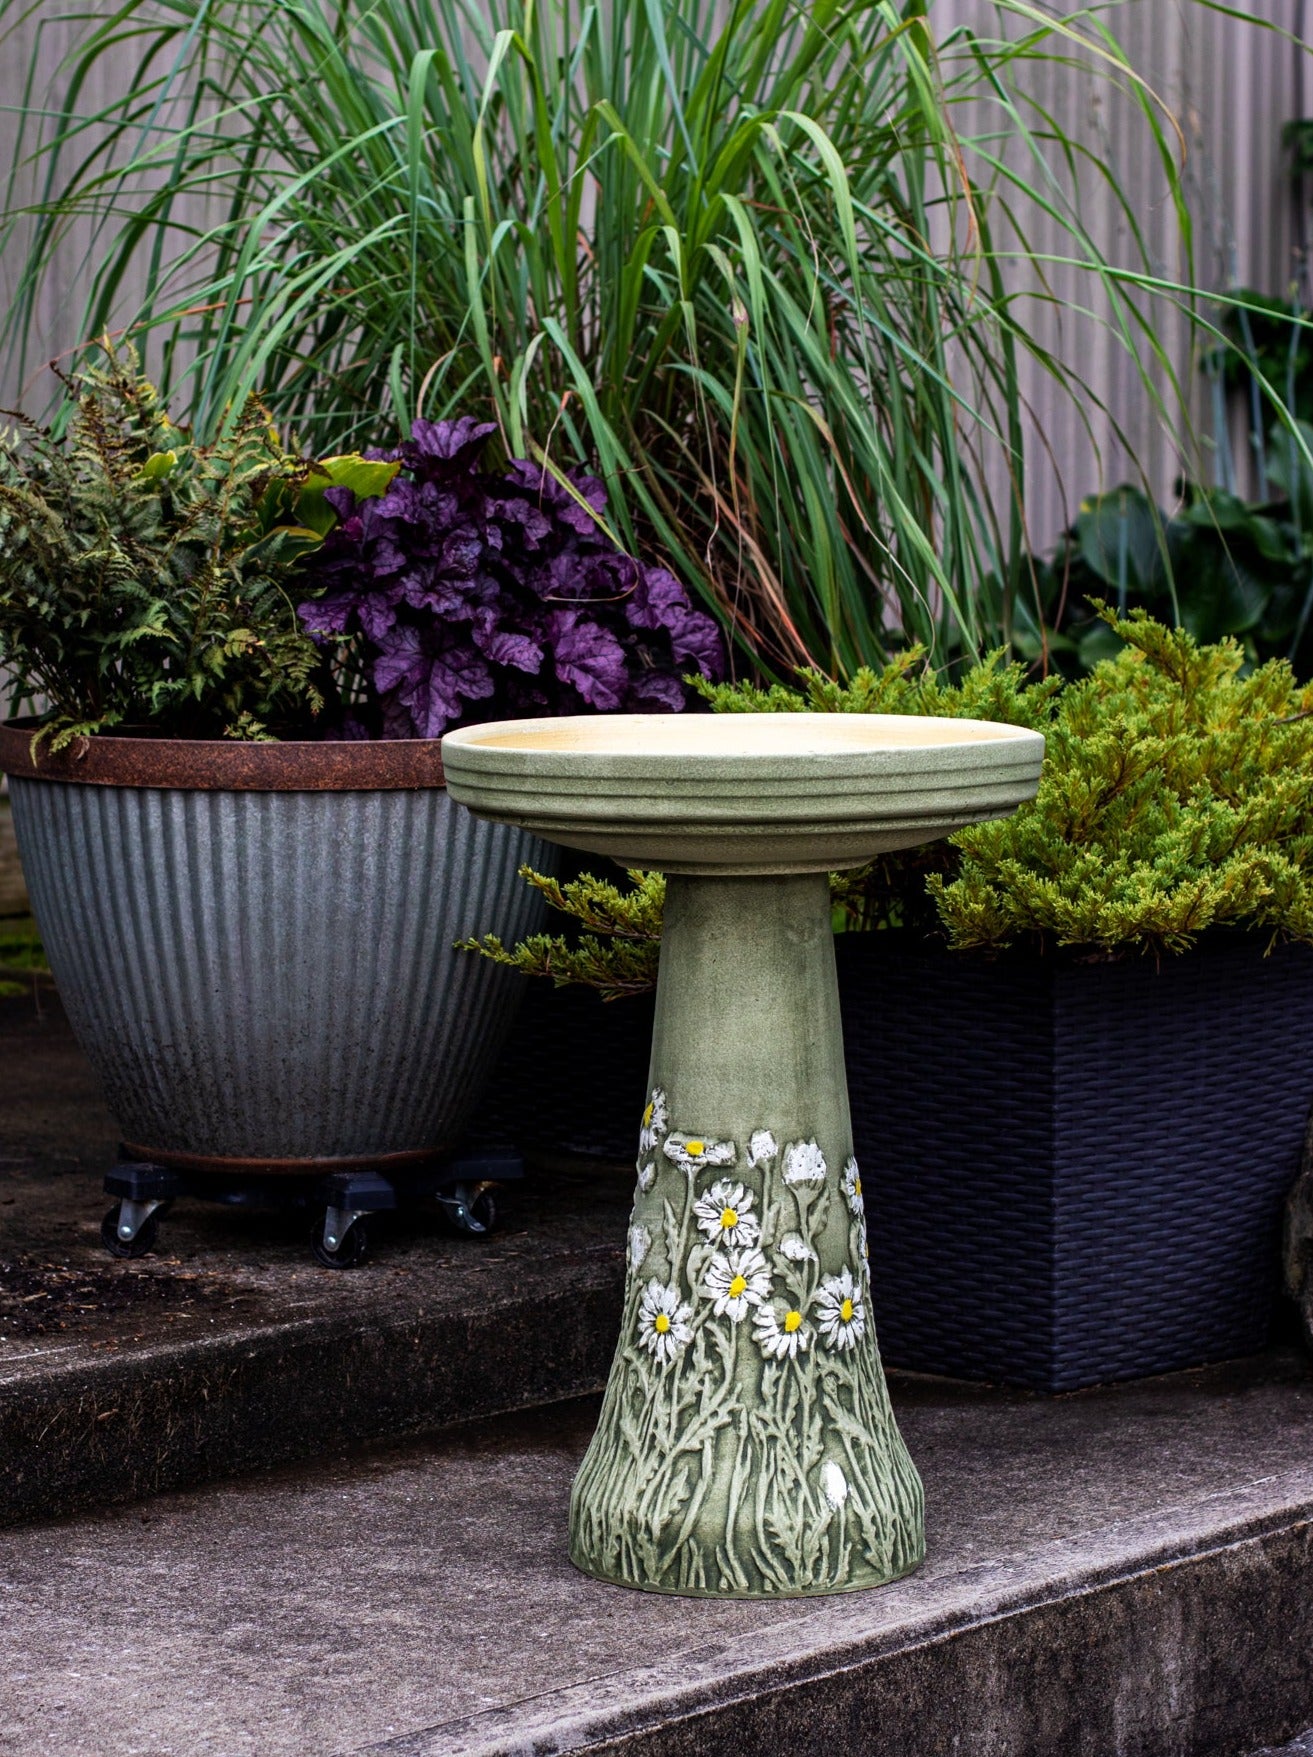 ceramic birdbath set with hand painted daisy flower design in landscaped garden area